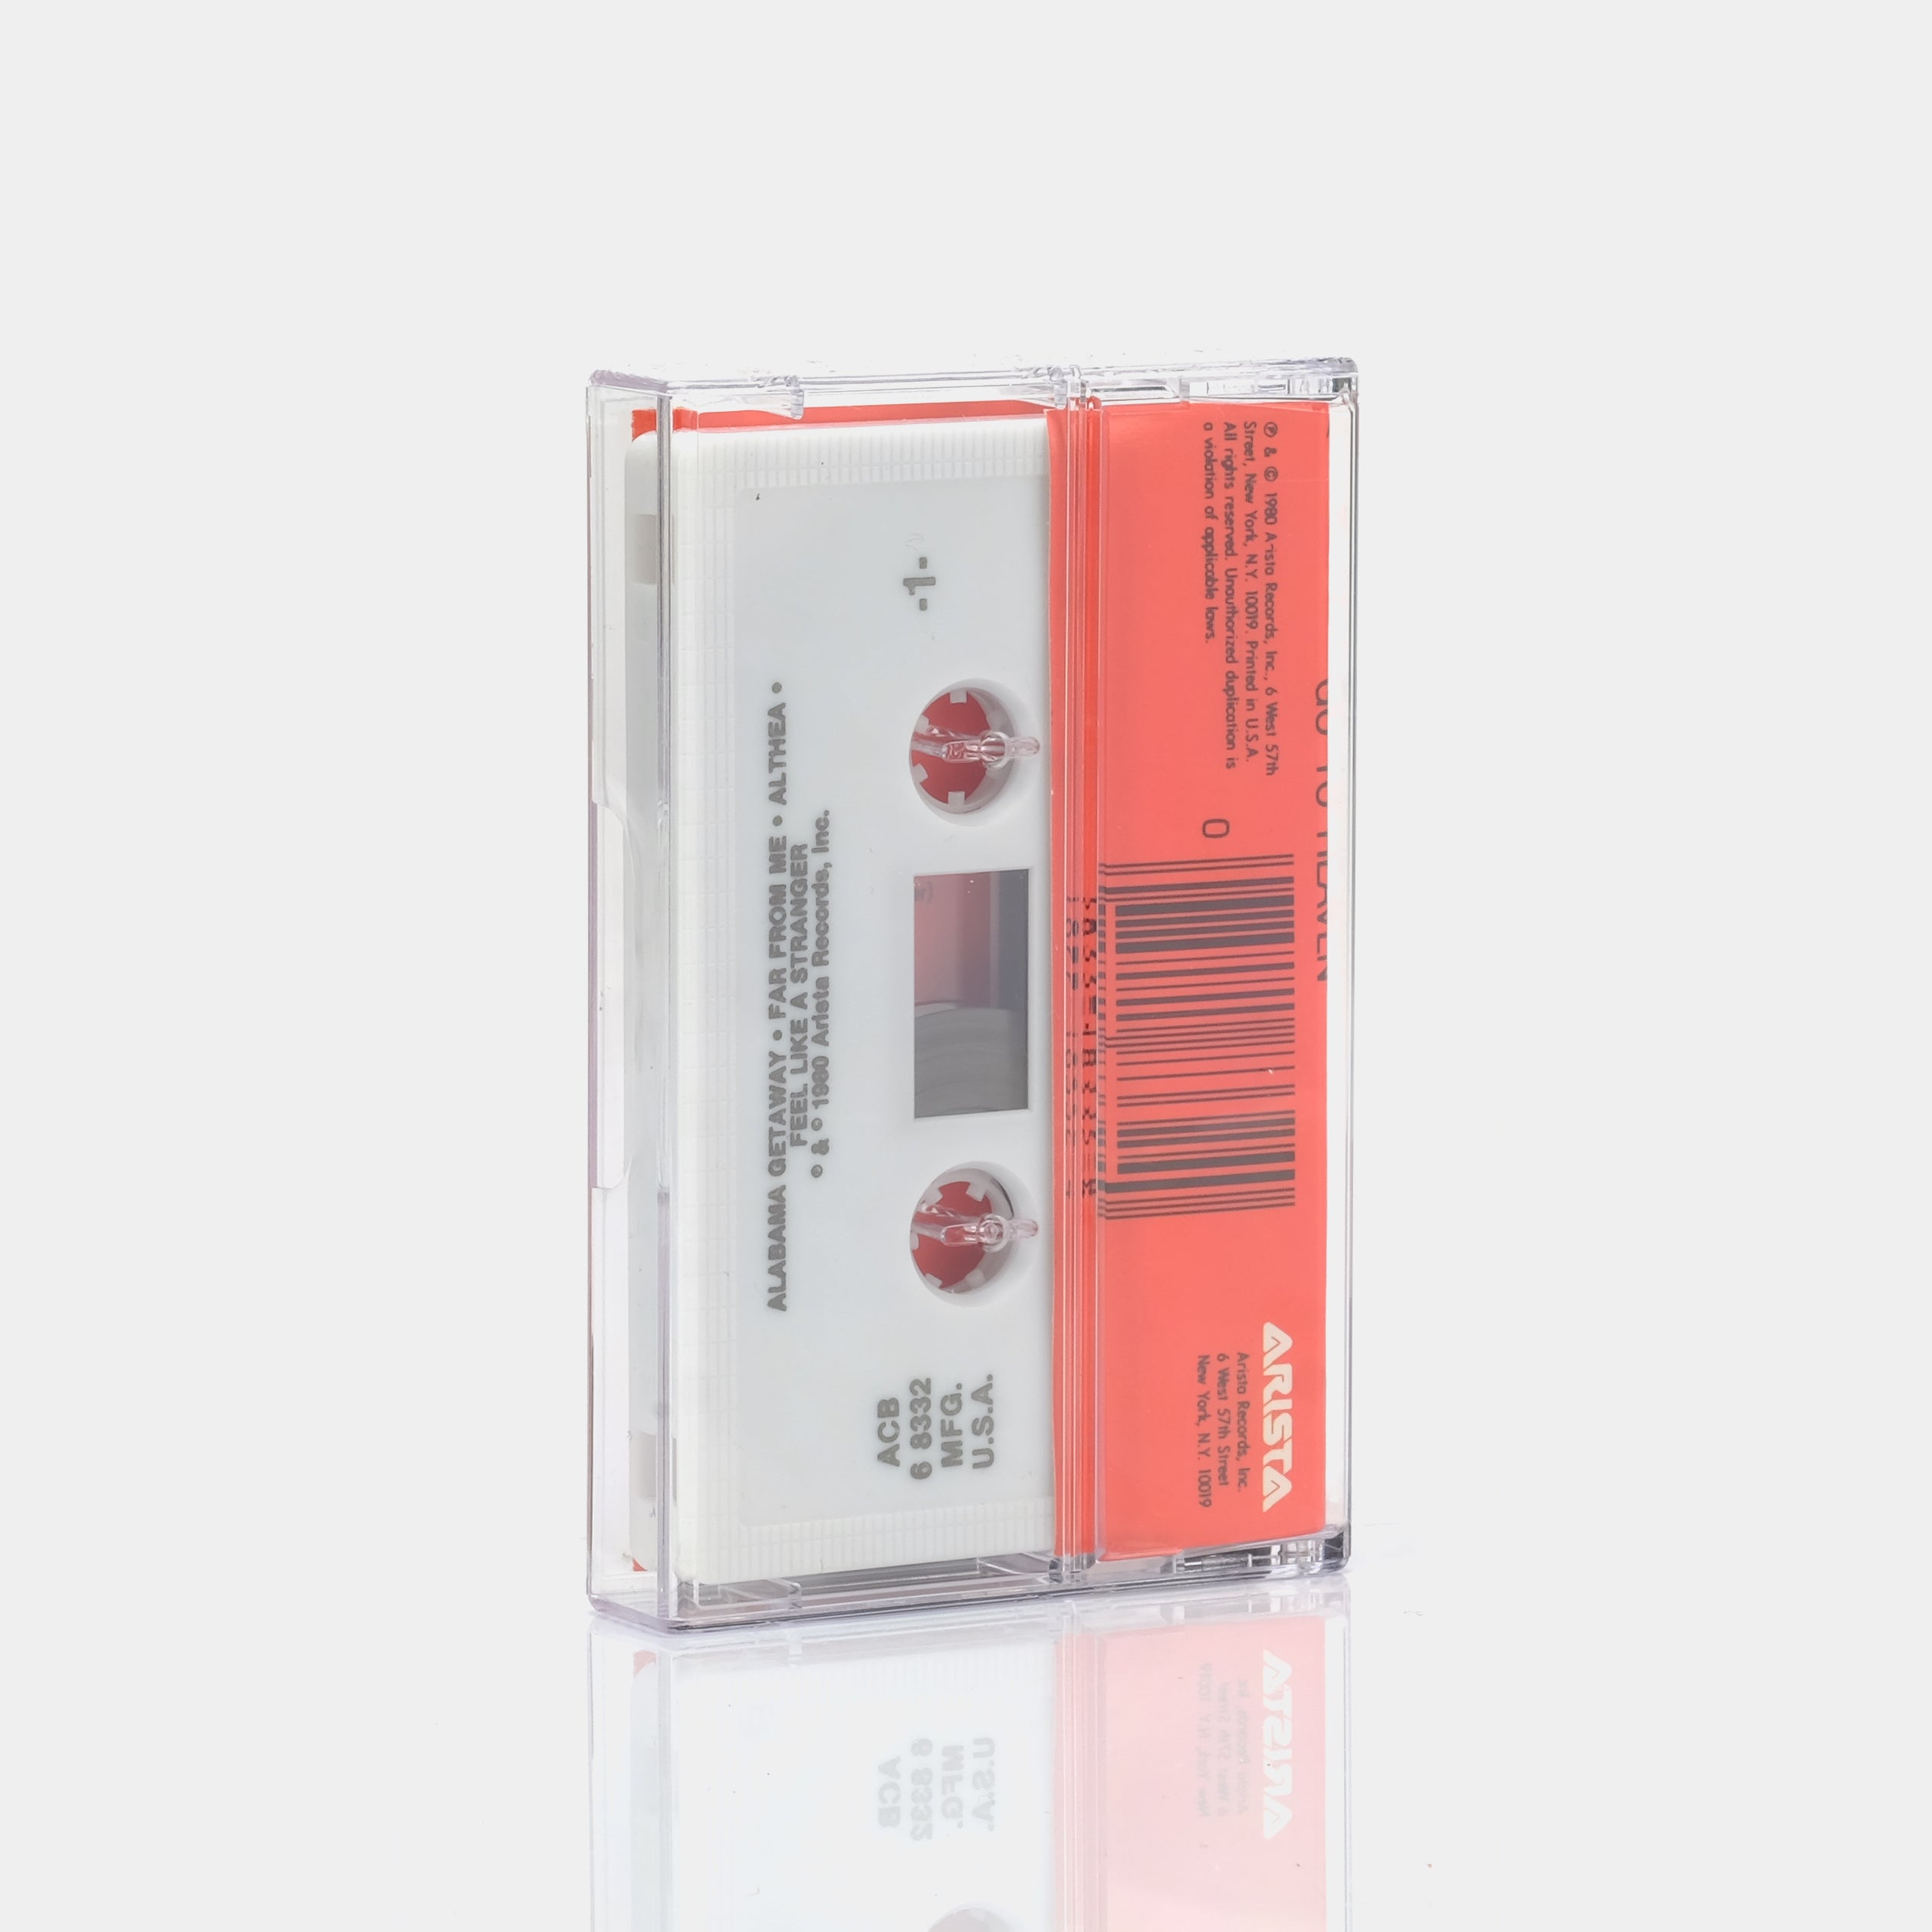 Grateful Dead - Go To Heaven Cassette Tape